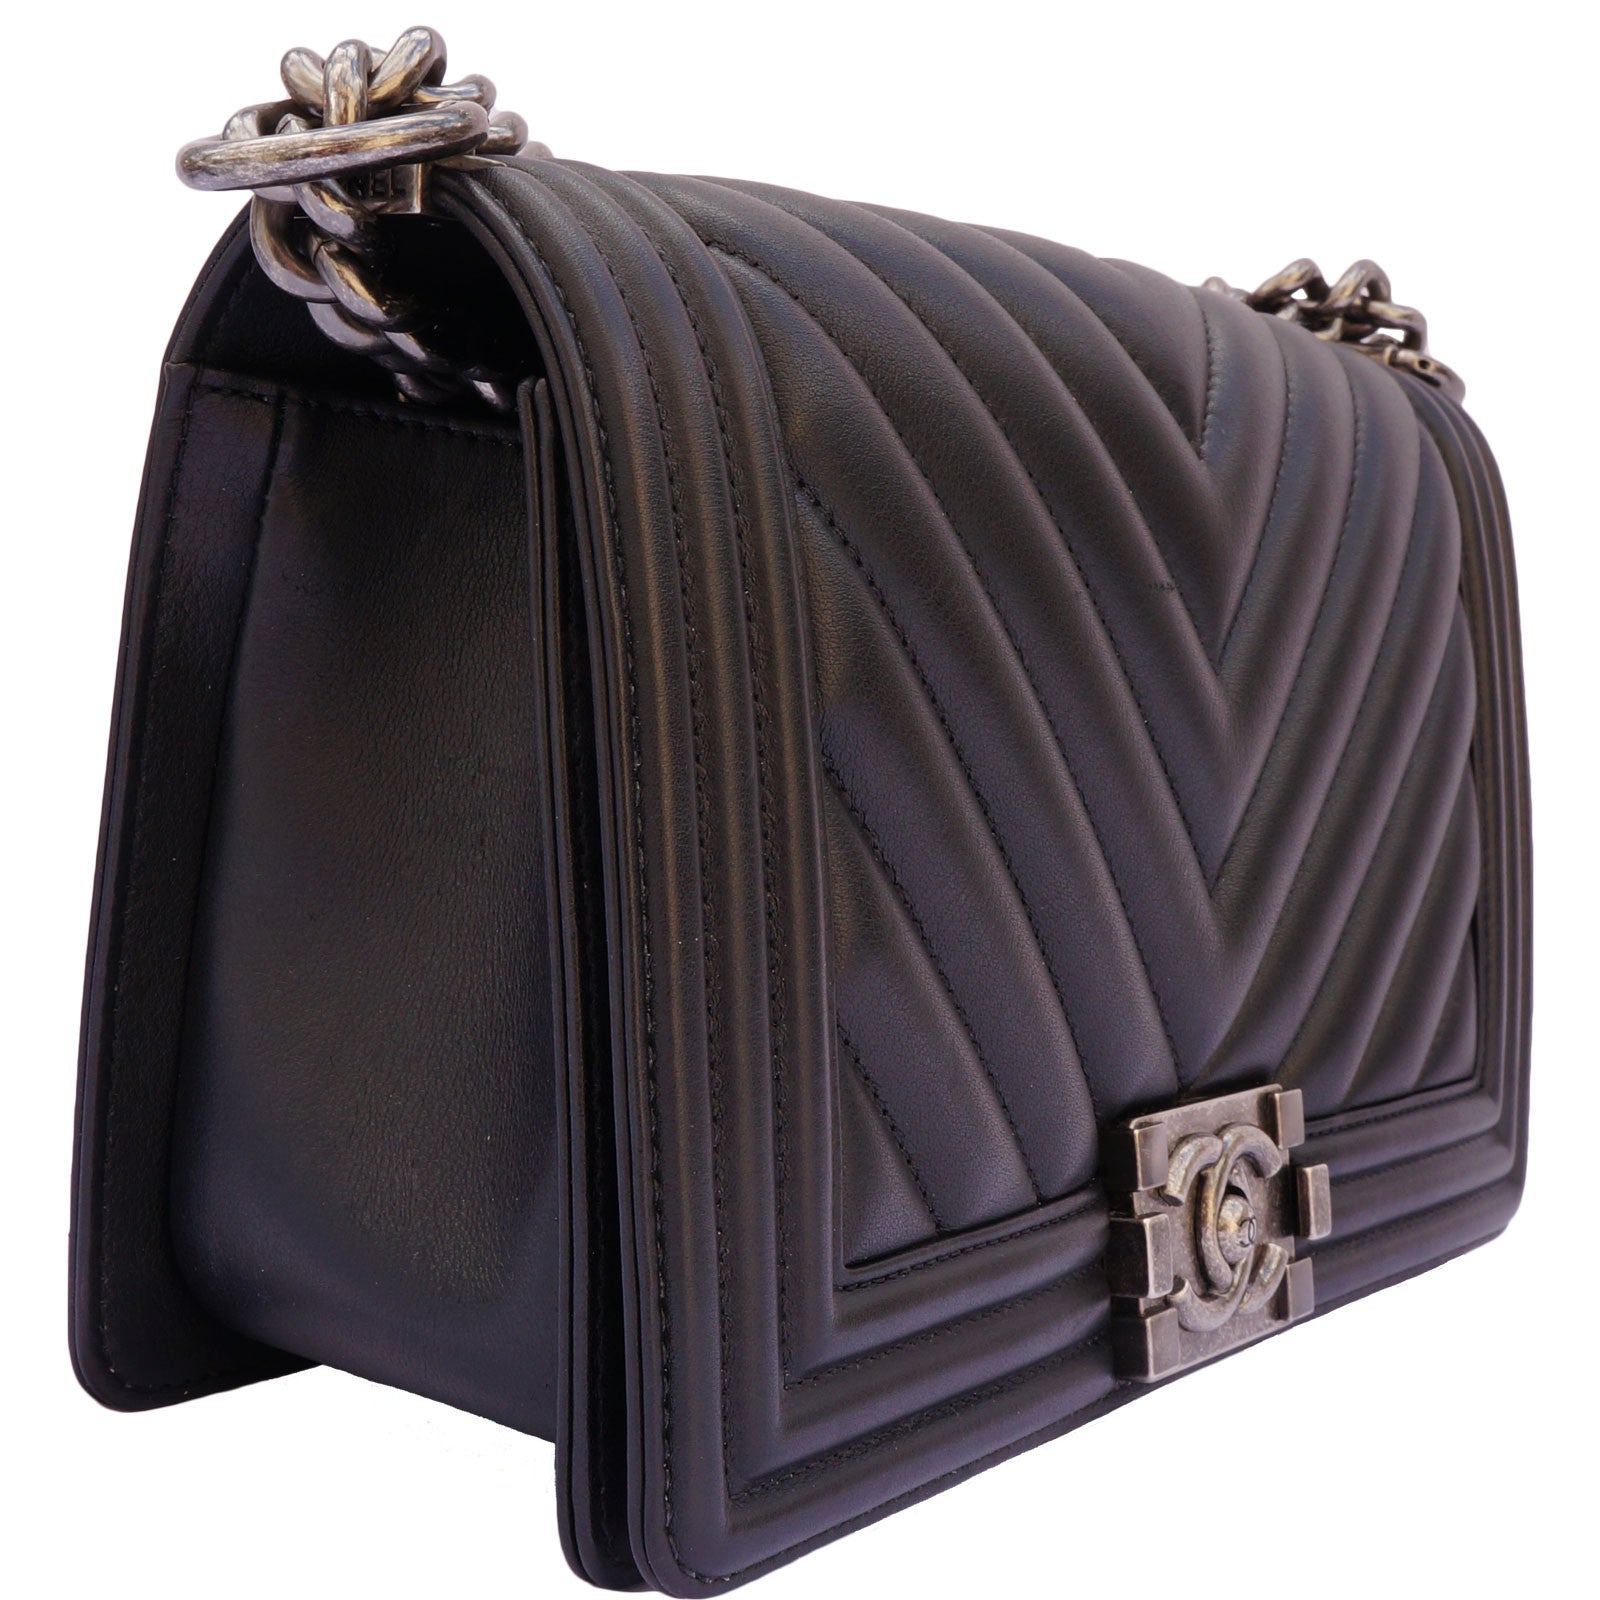 Chanel Women's Handbags & Purses For Men's | Paul Smith